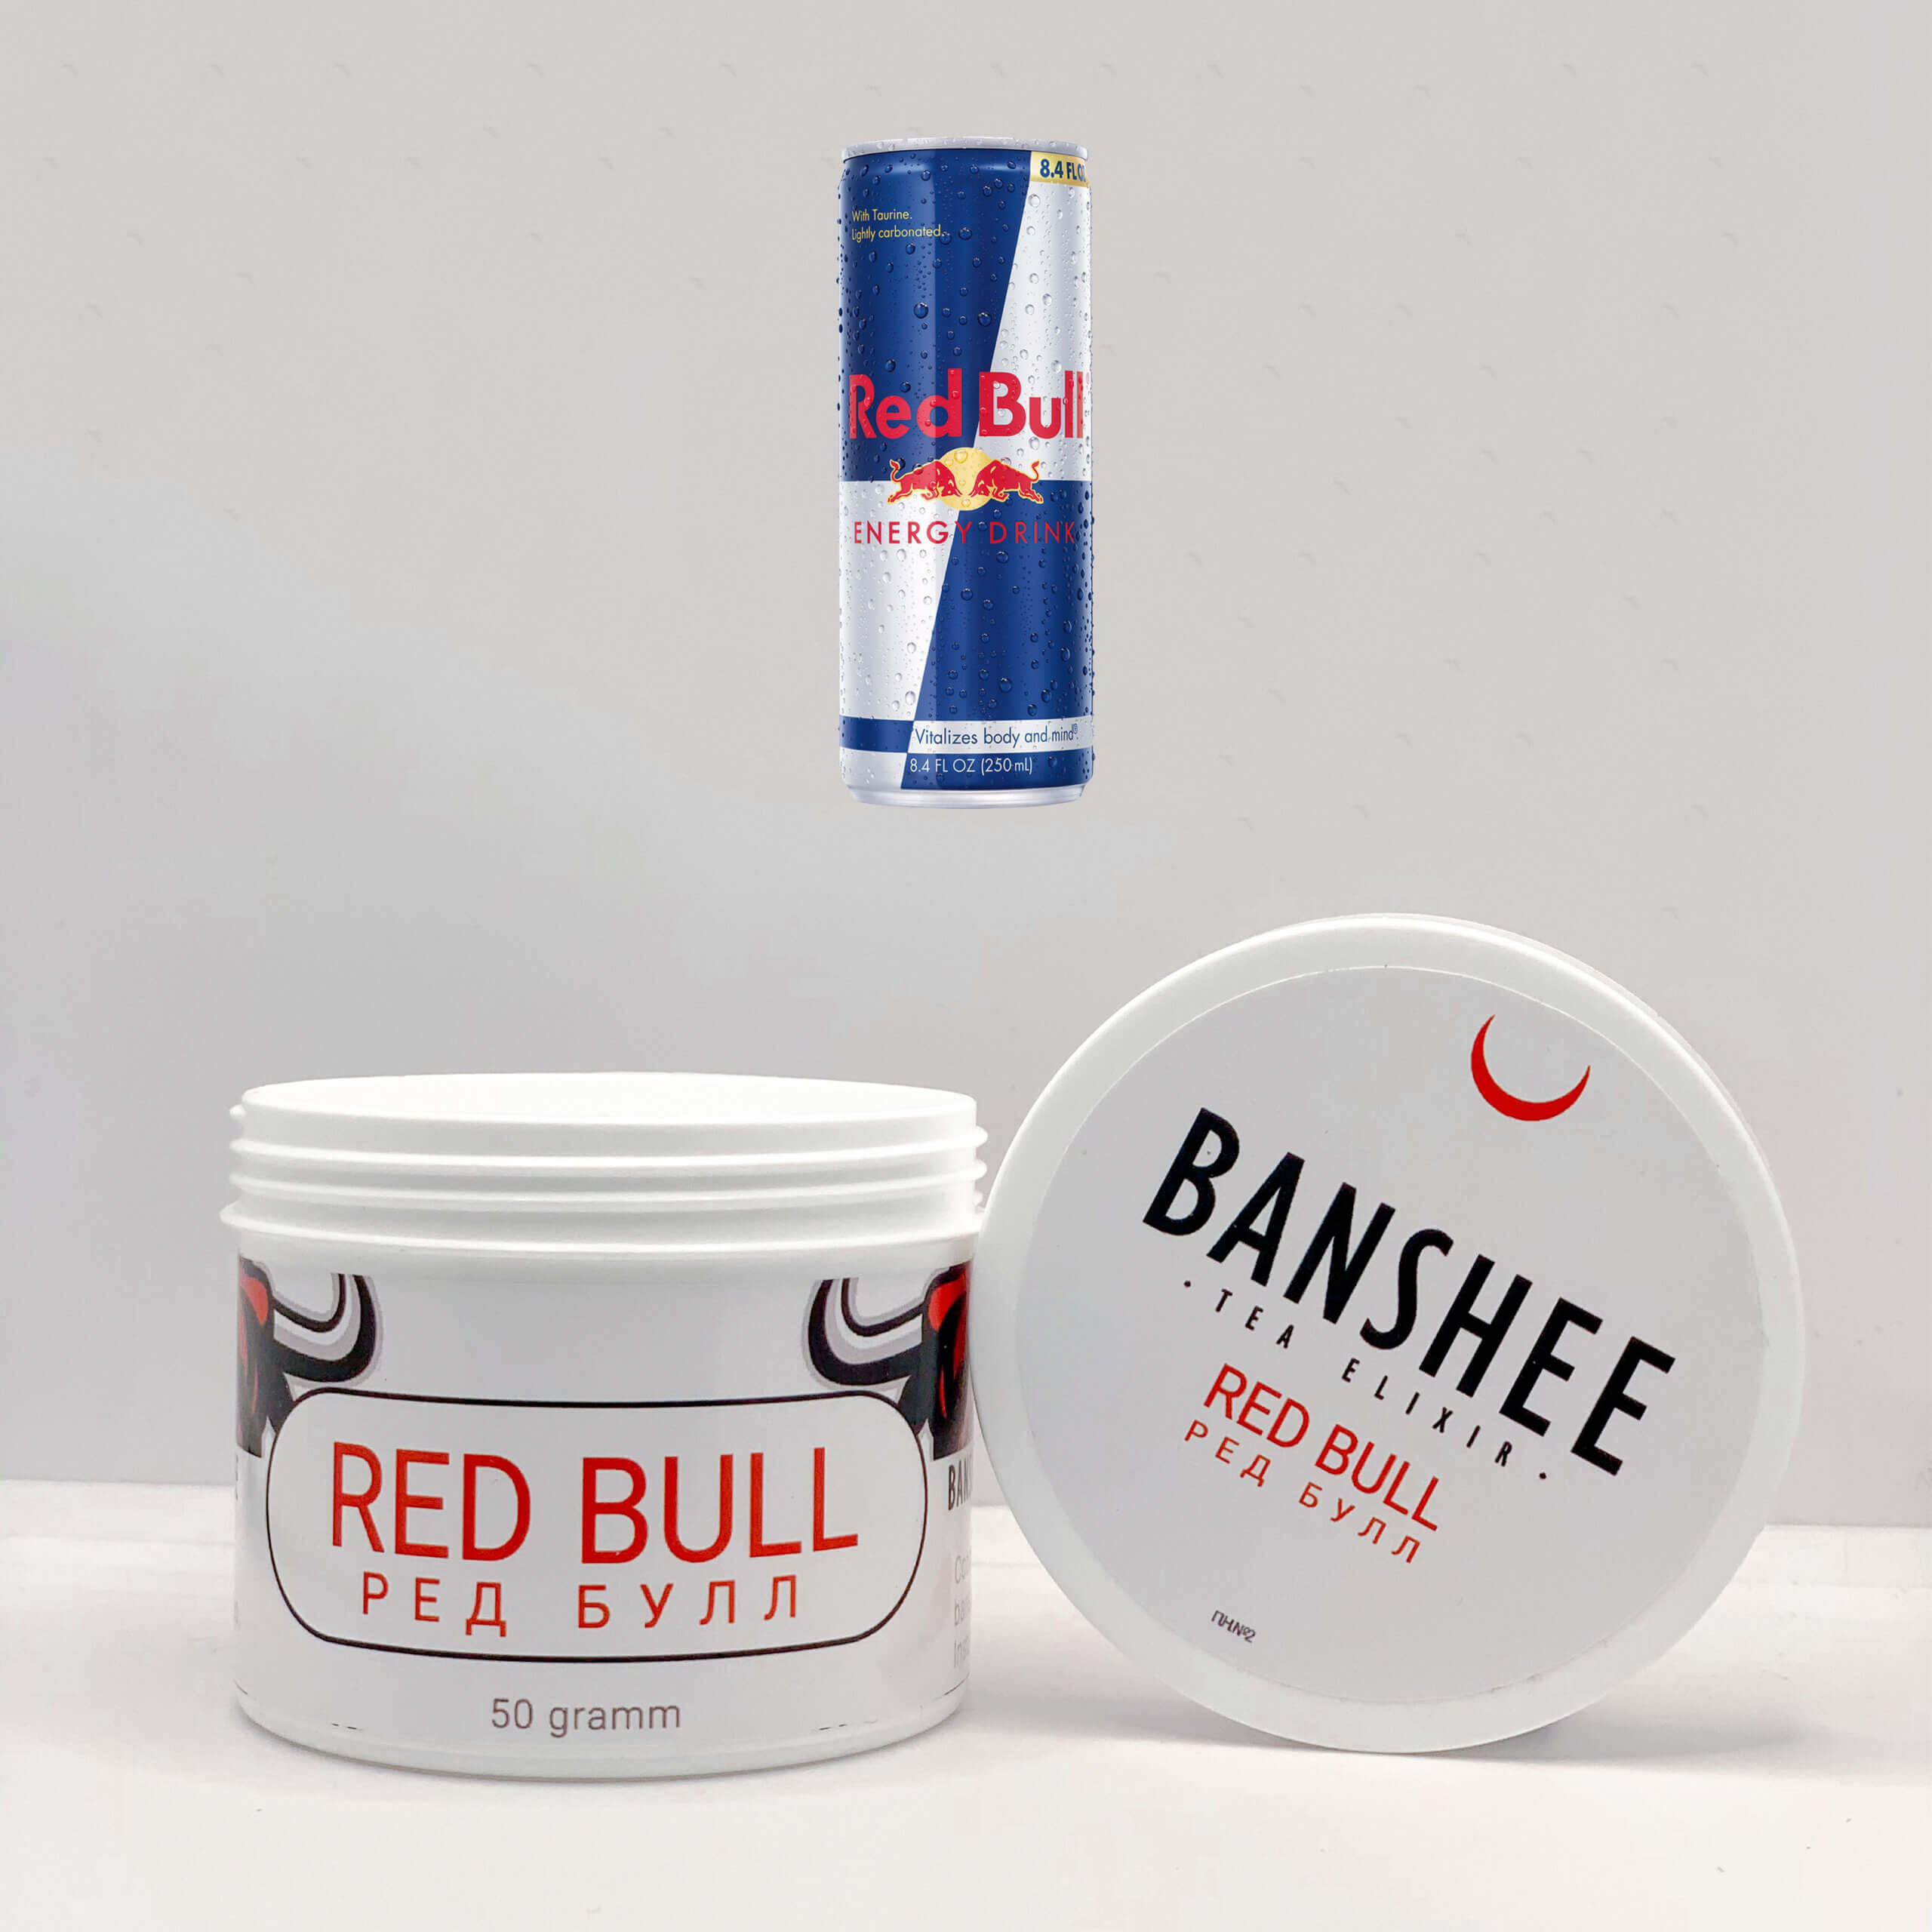 Табак Banshee Red bull - Ред бул